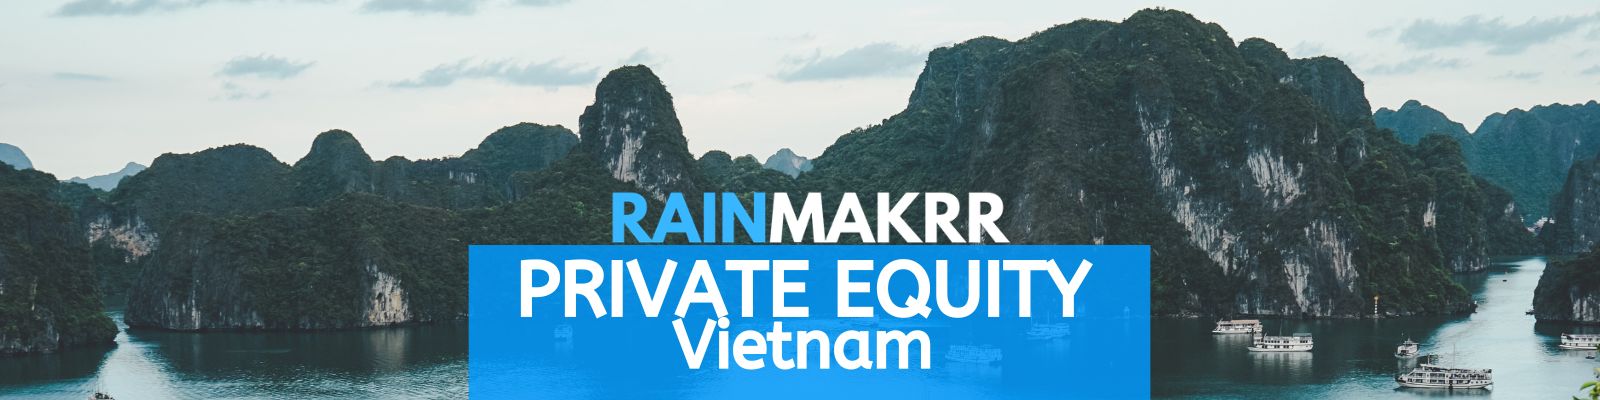 Vietnam Private Equity News Vietnam Private Equity Firms Vietnam